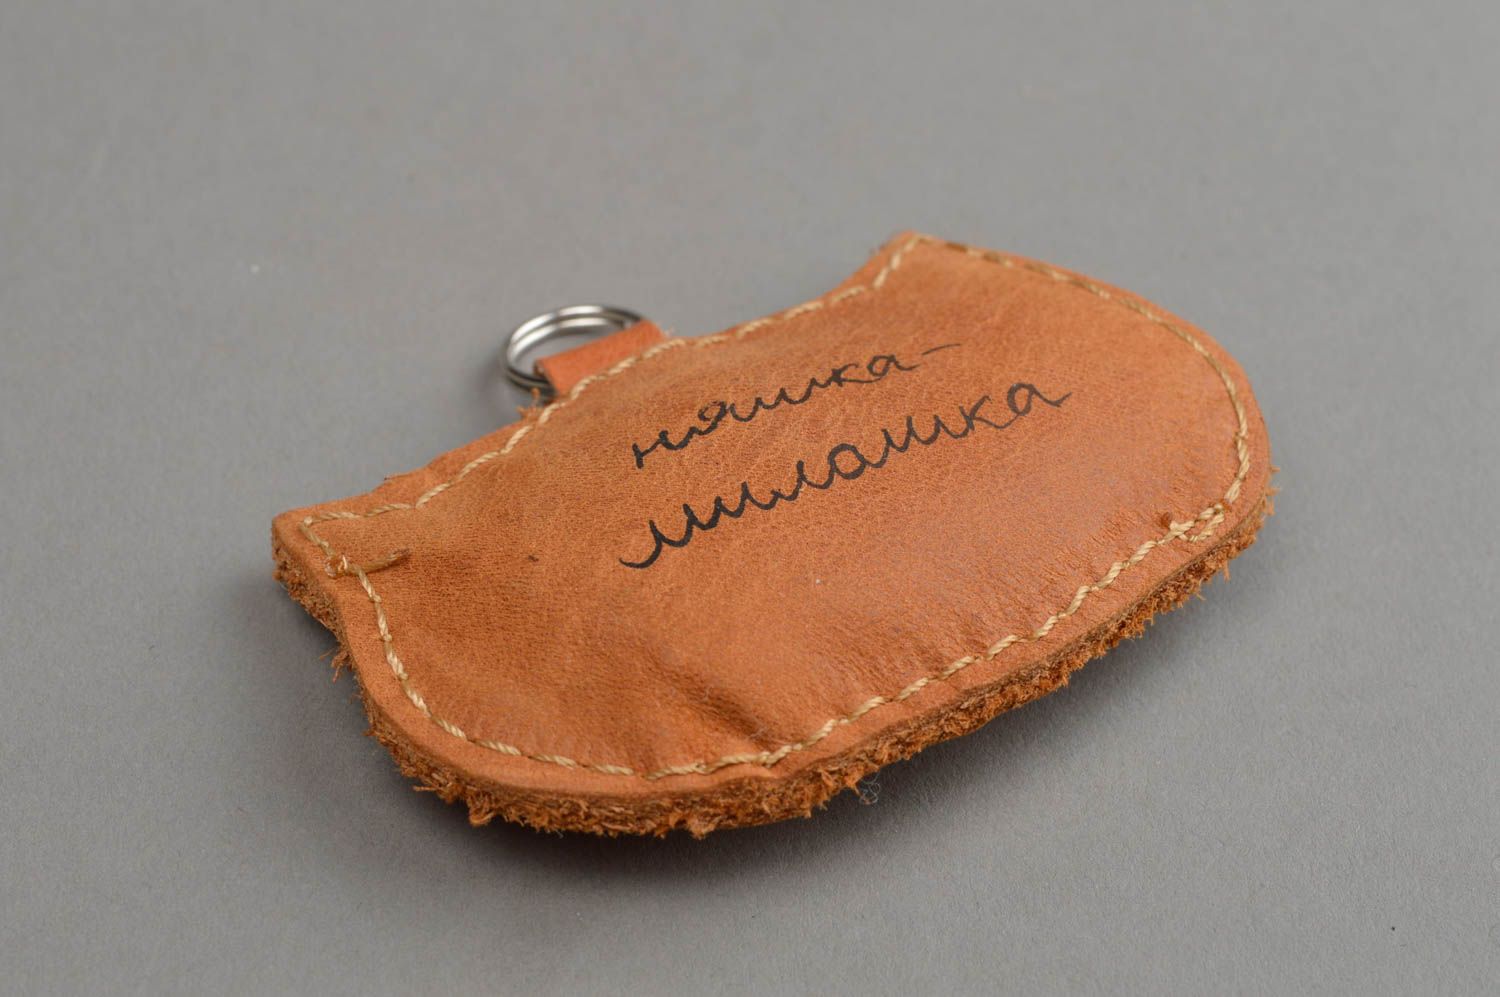 Unusual homemade genuine leather keychain fashion accessories gift ideas photo 4